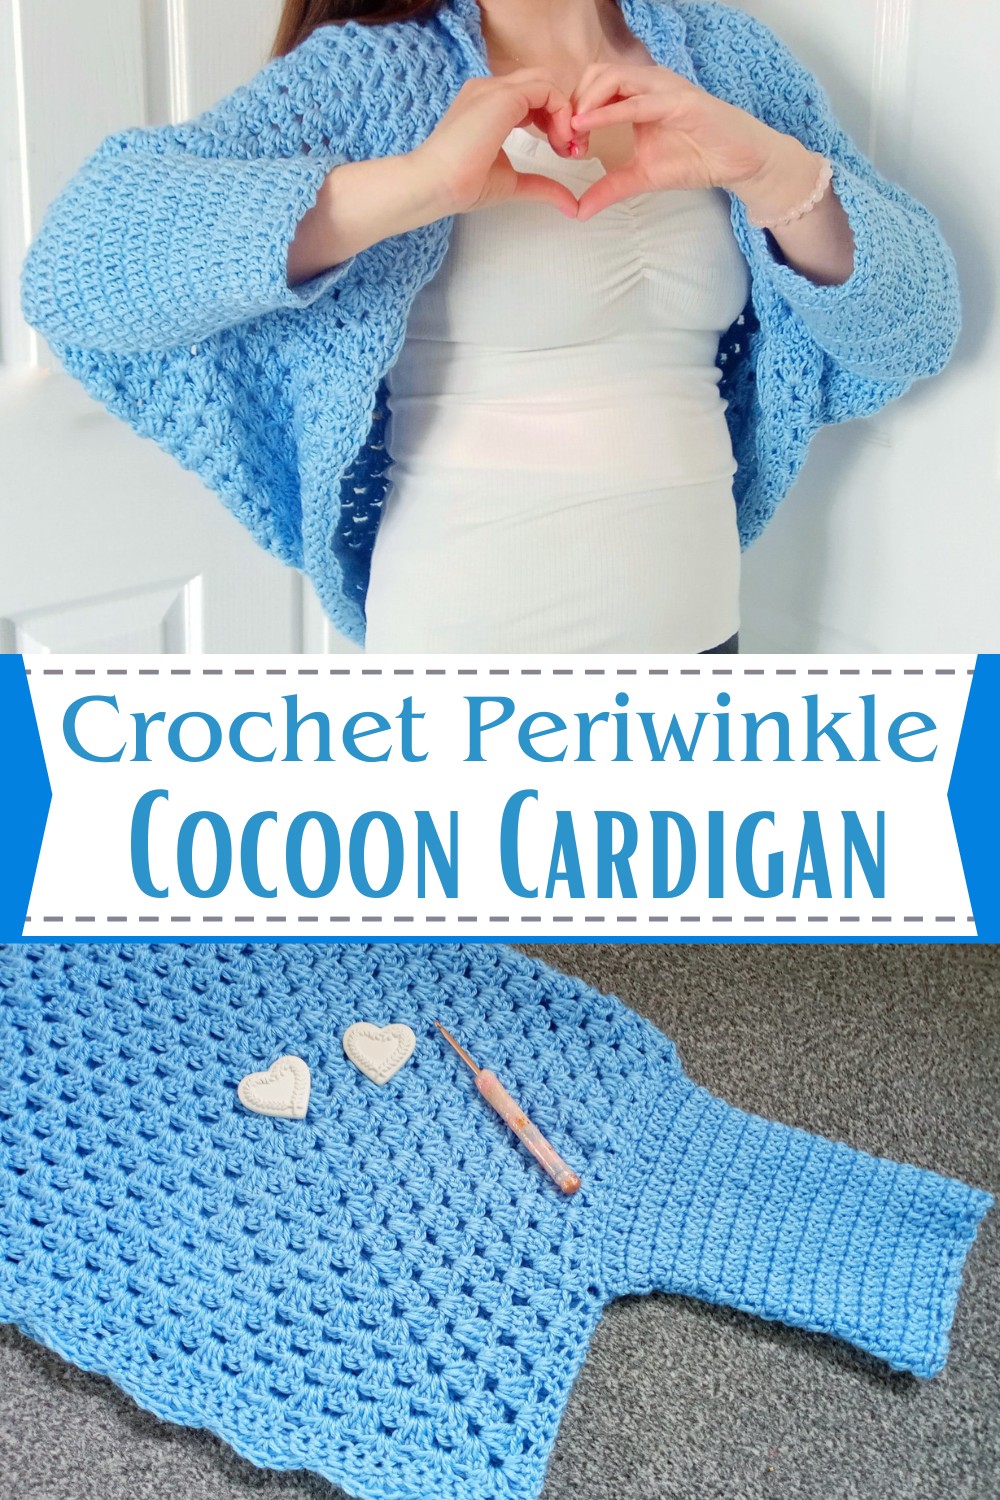 Crochet Periwinkle Cocoon Cardigan